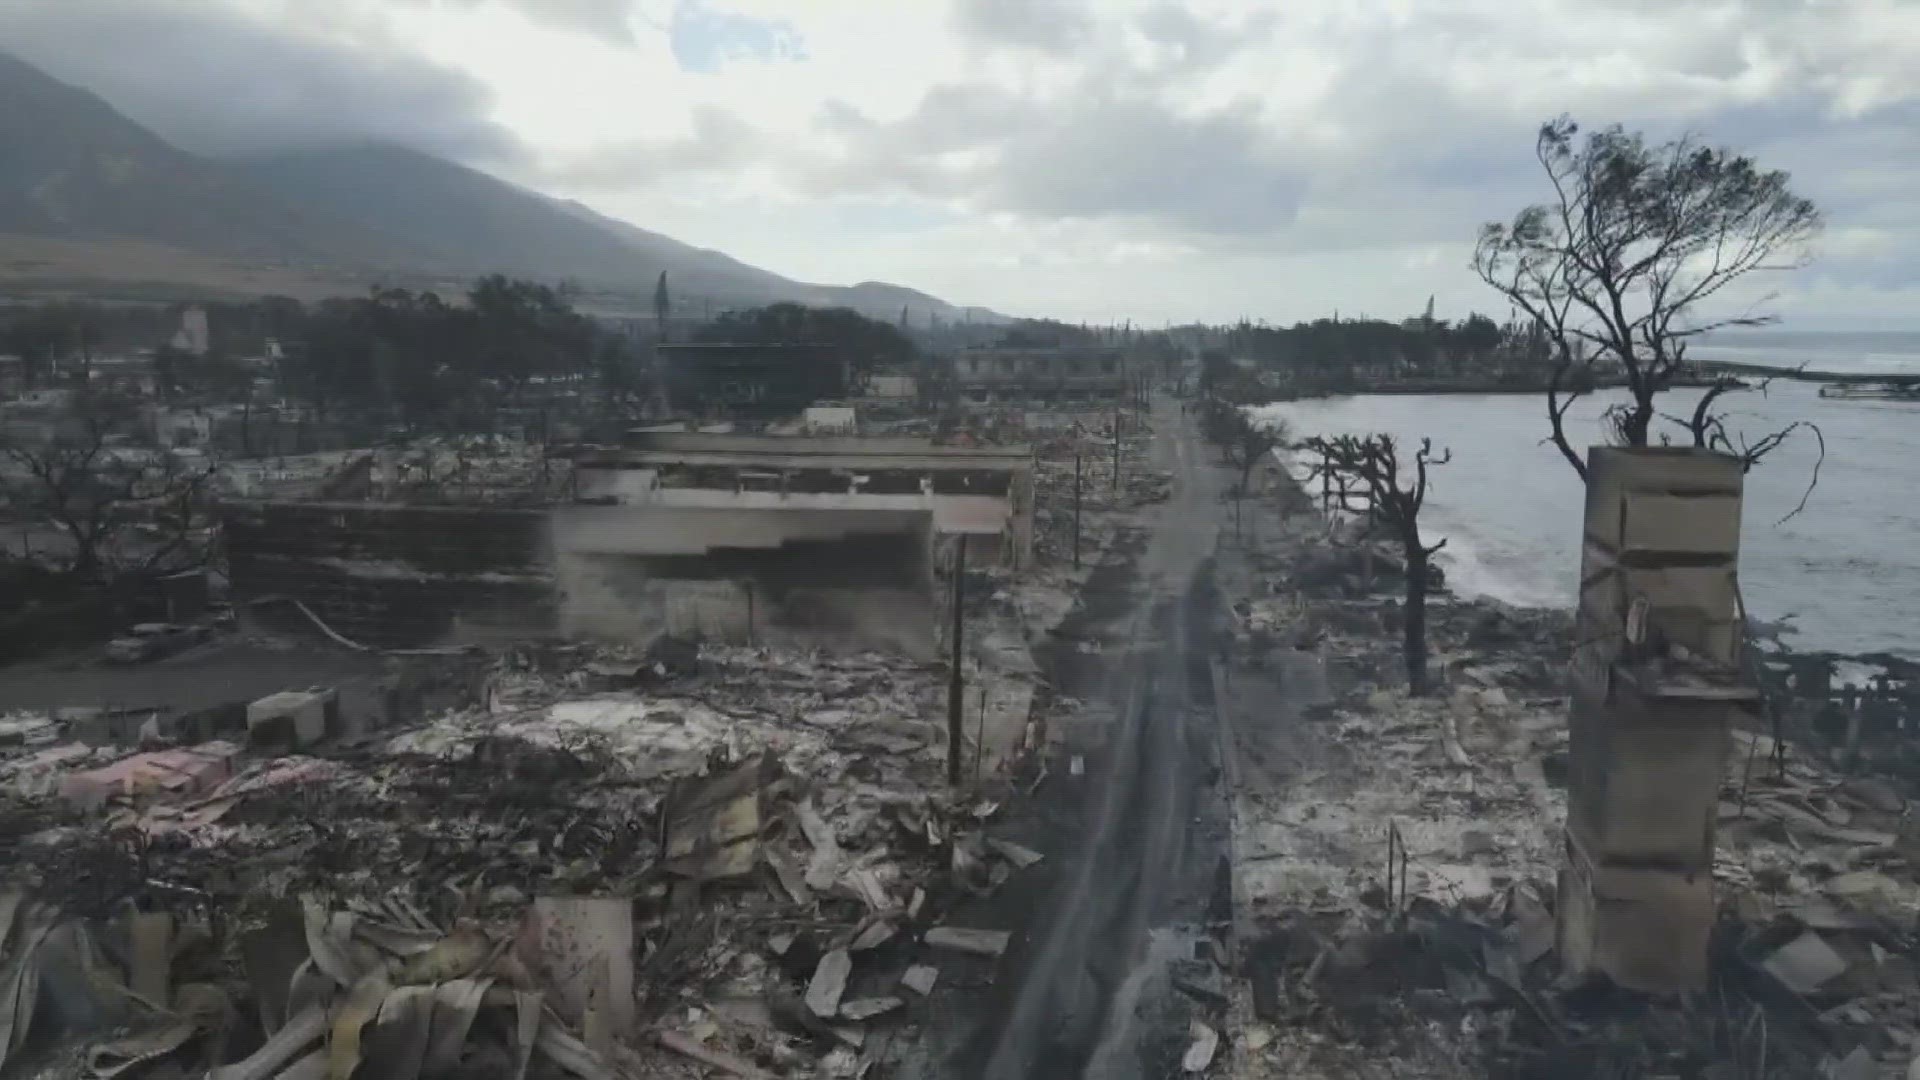 Maui Deadly Wildfires: Sacramento faith leader shares experiences after visiting Hawaii